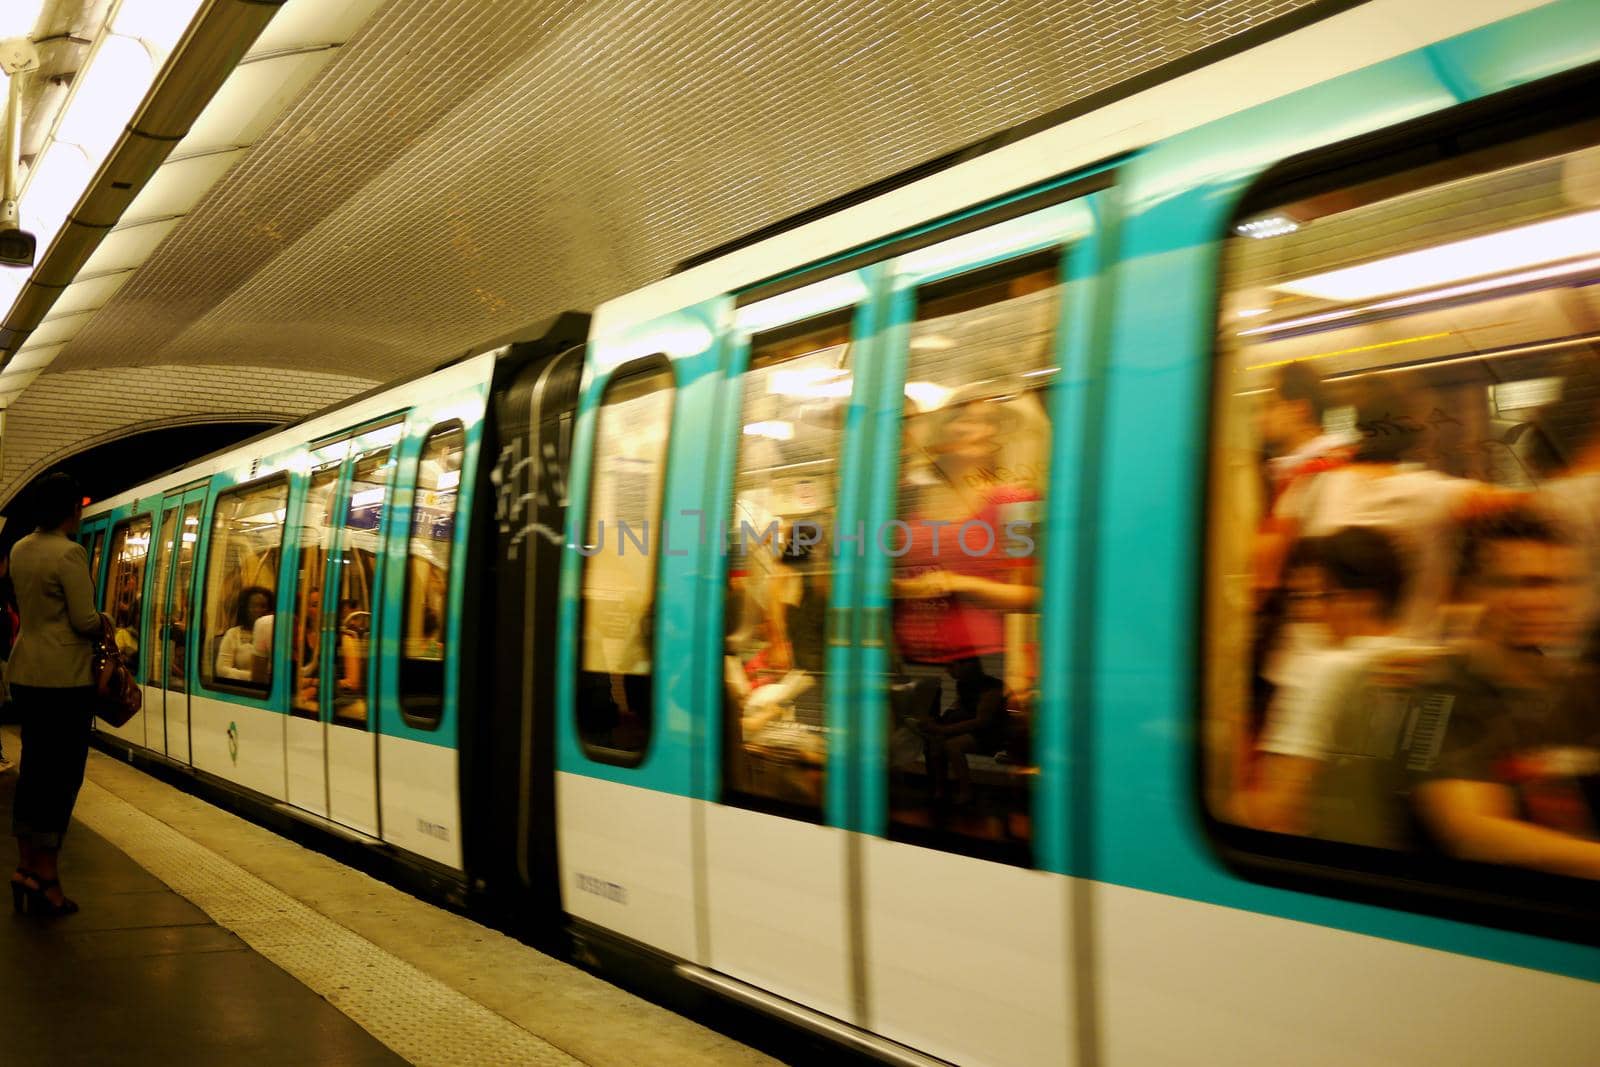 Metro station underground